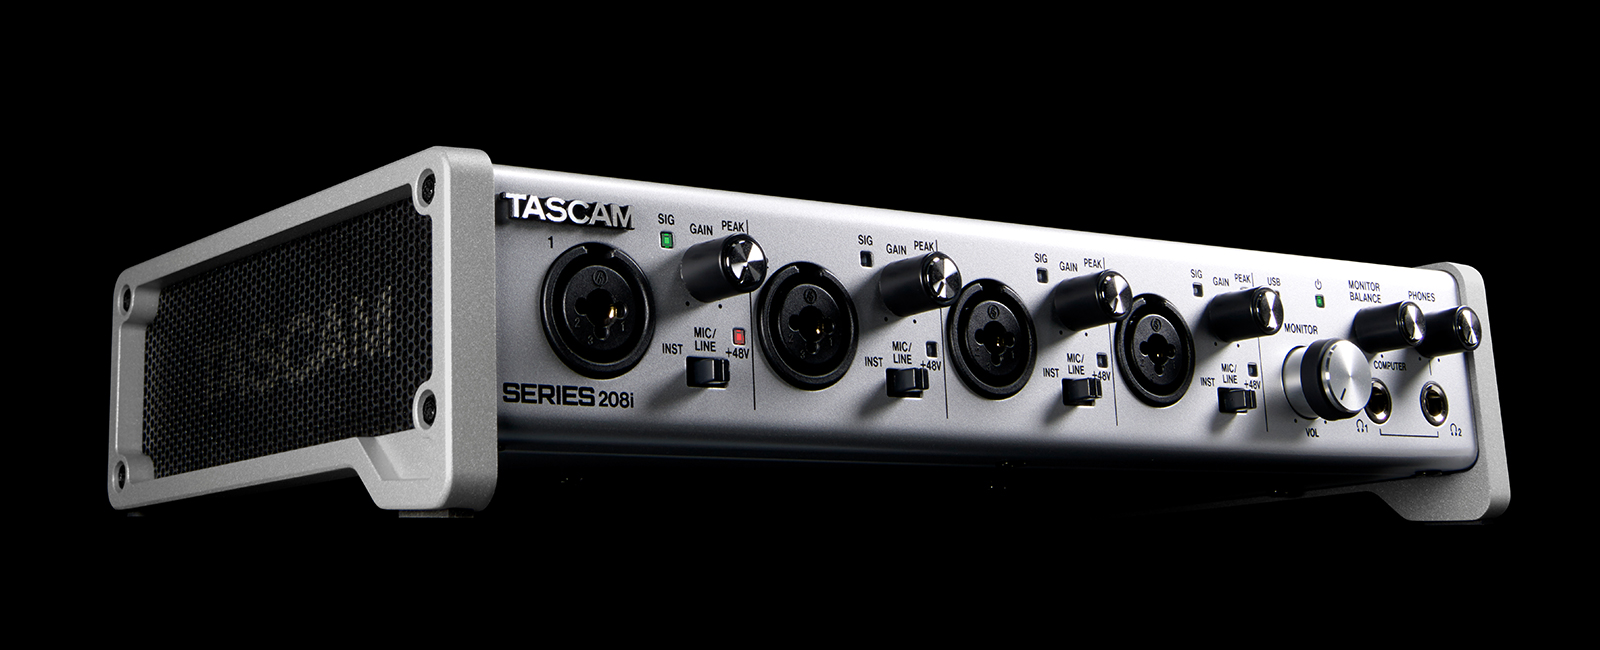 TASCAM Announces the Upgrade Your Audio Interface Program